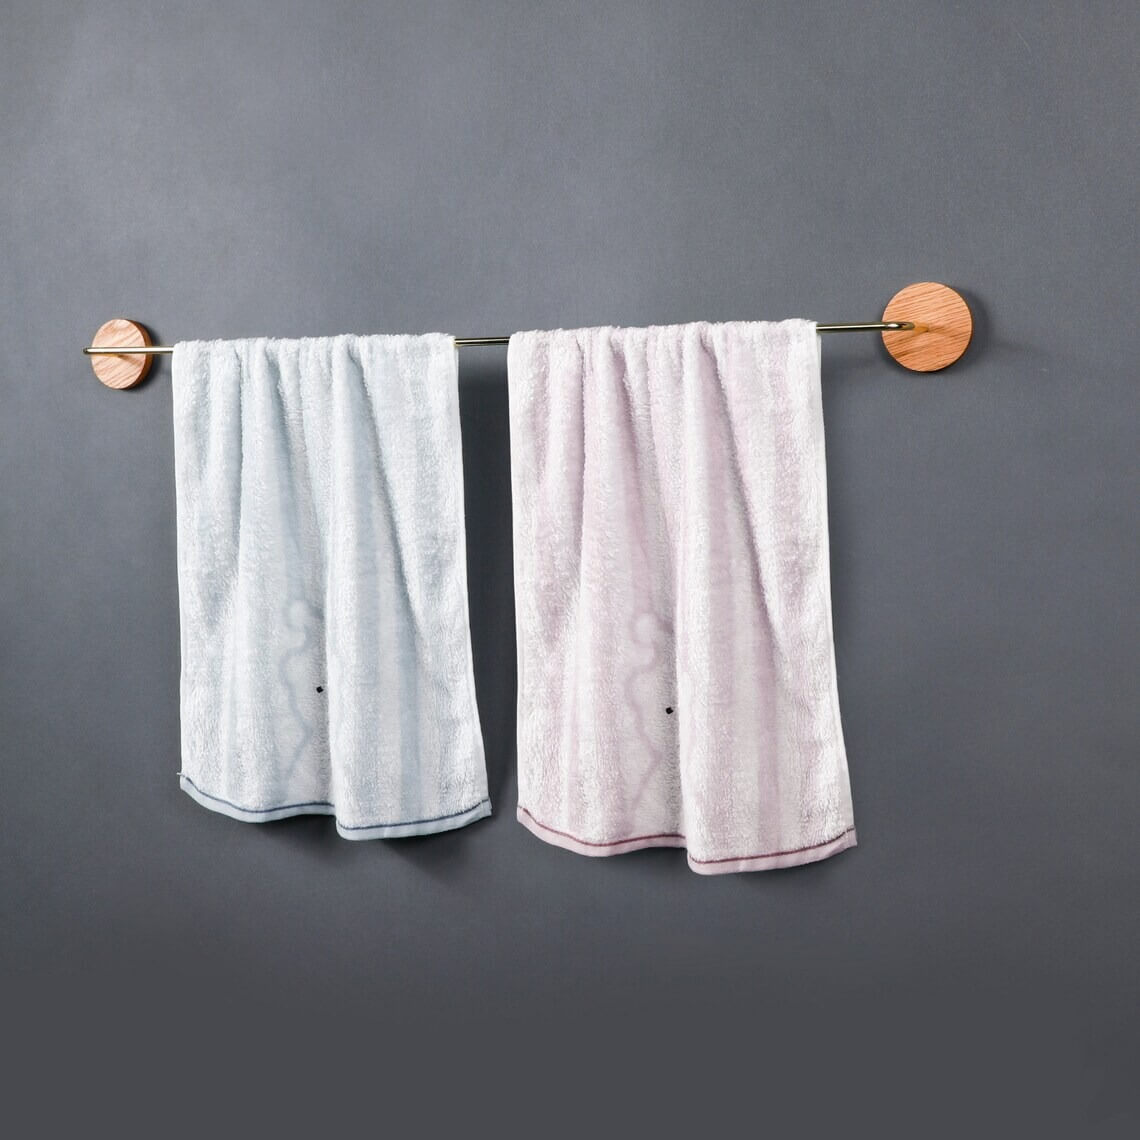 Bathroom-Wood-Brass-Towel-Rack-Holder-Wall-Mounted-Set